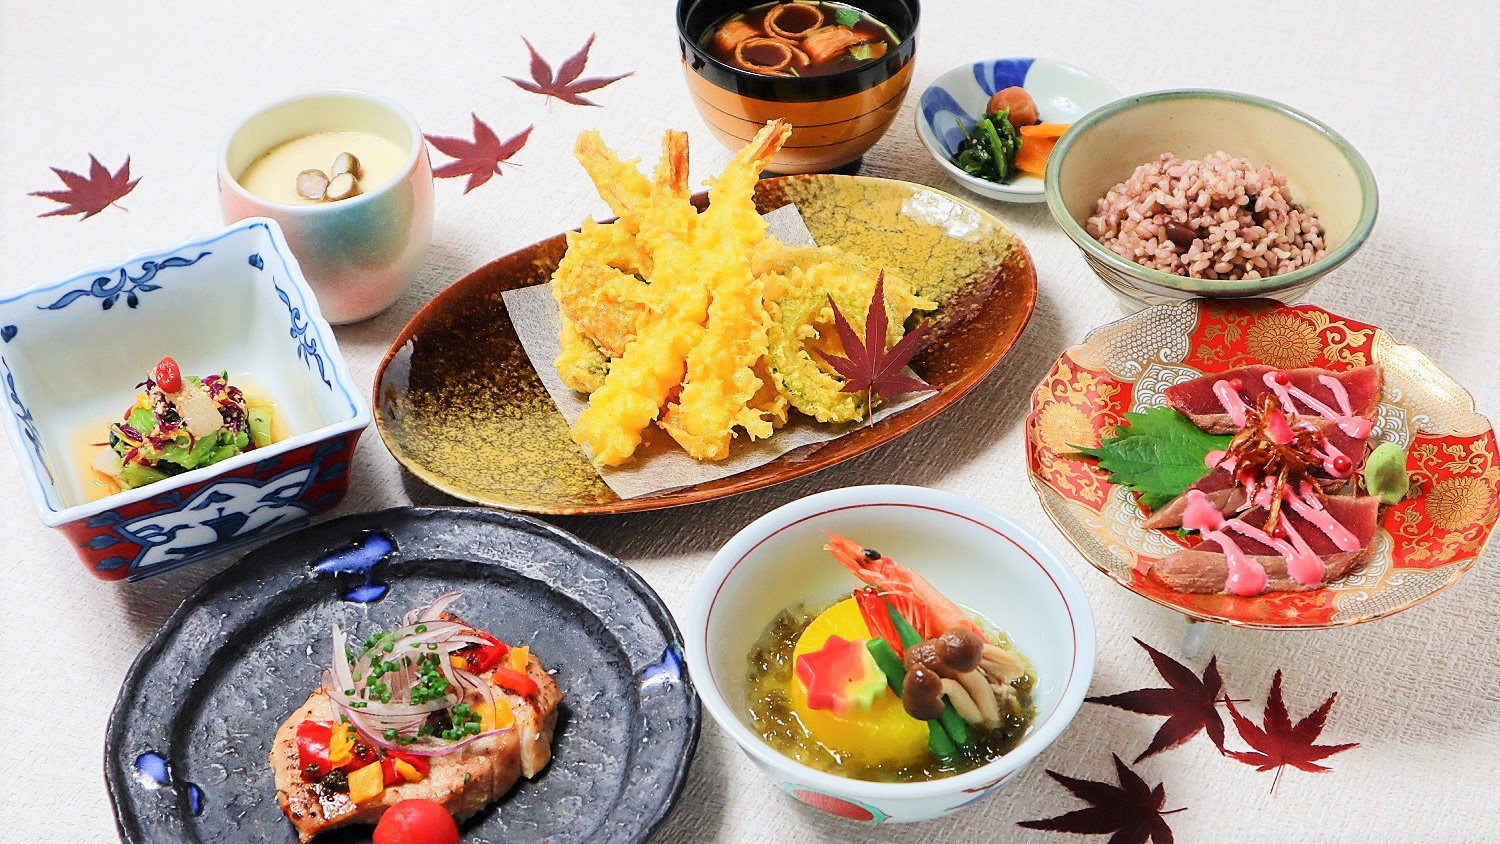 【TOKI】四季折々の旬の食材を生かす熟練シェフの繊細な手仕事で和食と琉球料理をご堪能下さい。